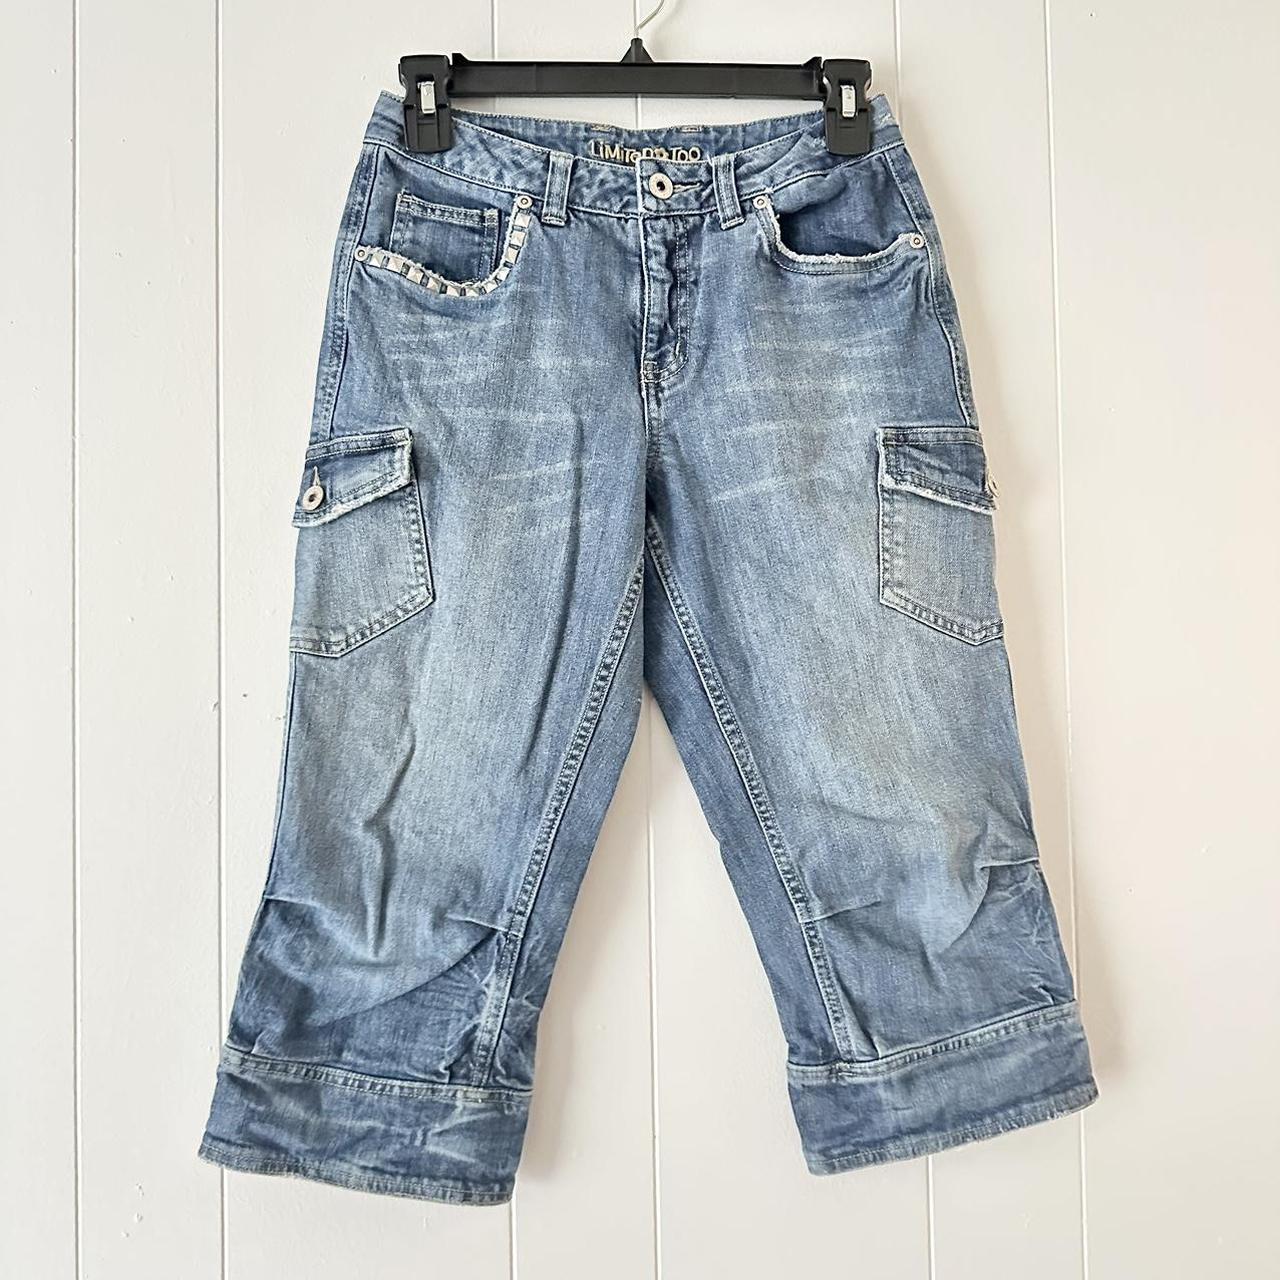 Cargo Man Denim Shorts Knee Length Half Long Bermuda Short Jeans Pants for  Men with Pockets Blue Luxury Jorts Thin Streetwear Xl - AliExpress